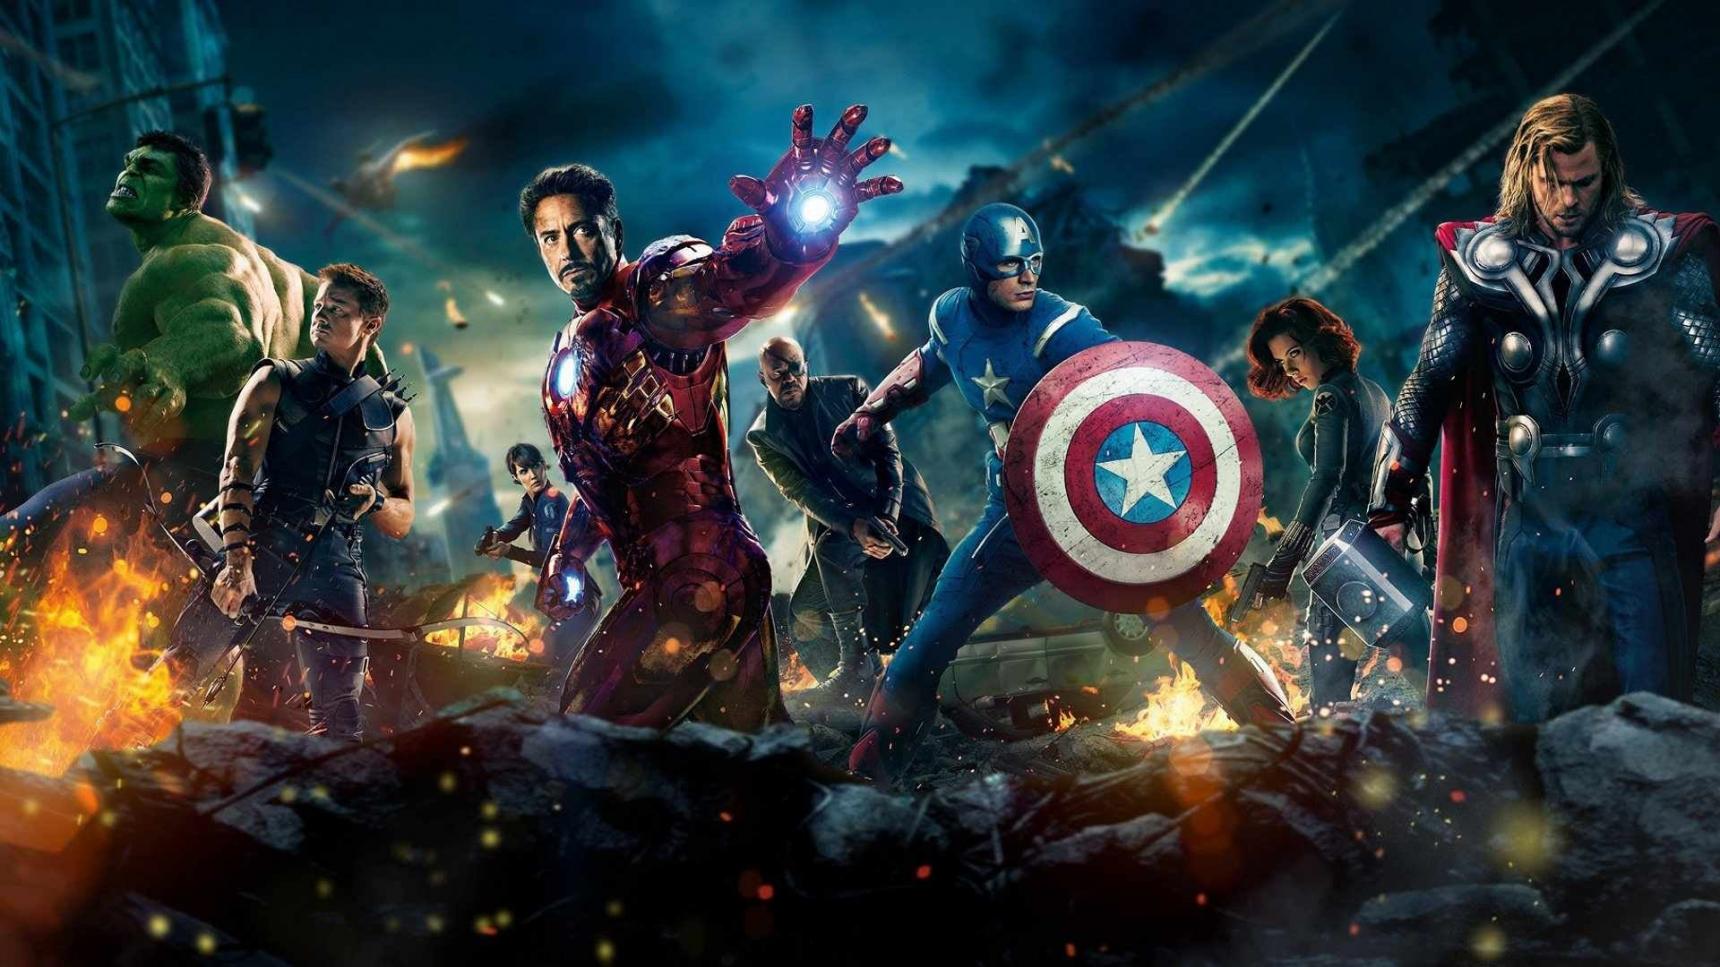 Fondo de pantalla de la película The Avengers (Los vengadores) en Cliver.tv gratis